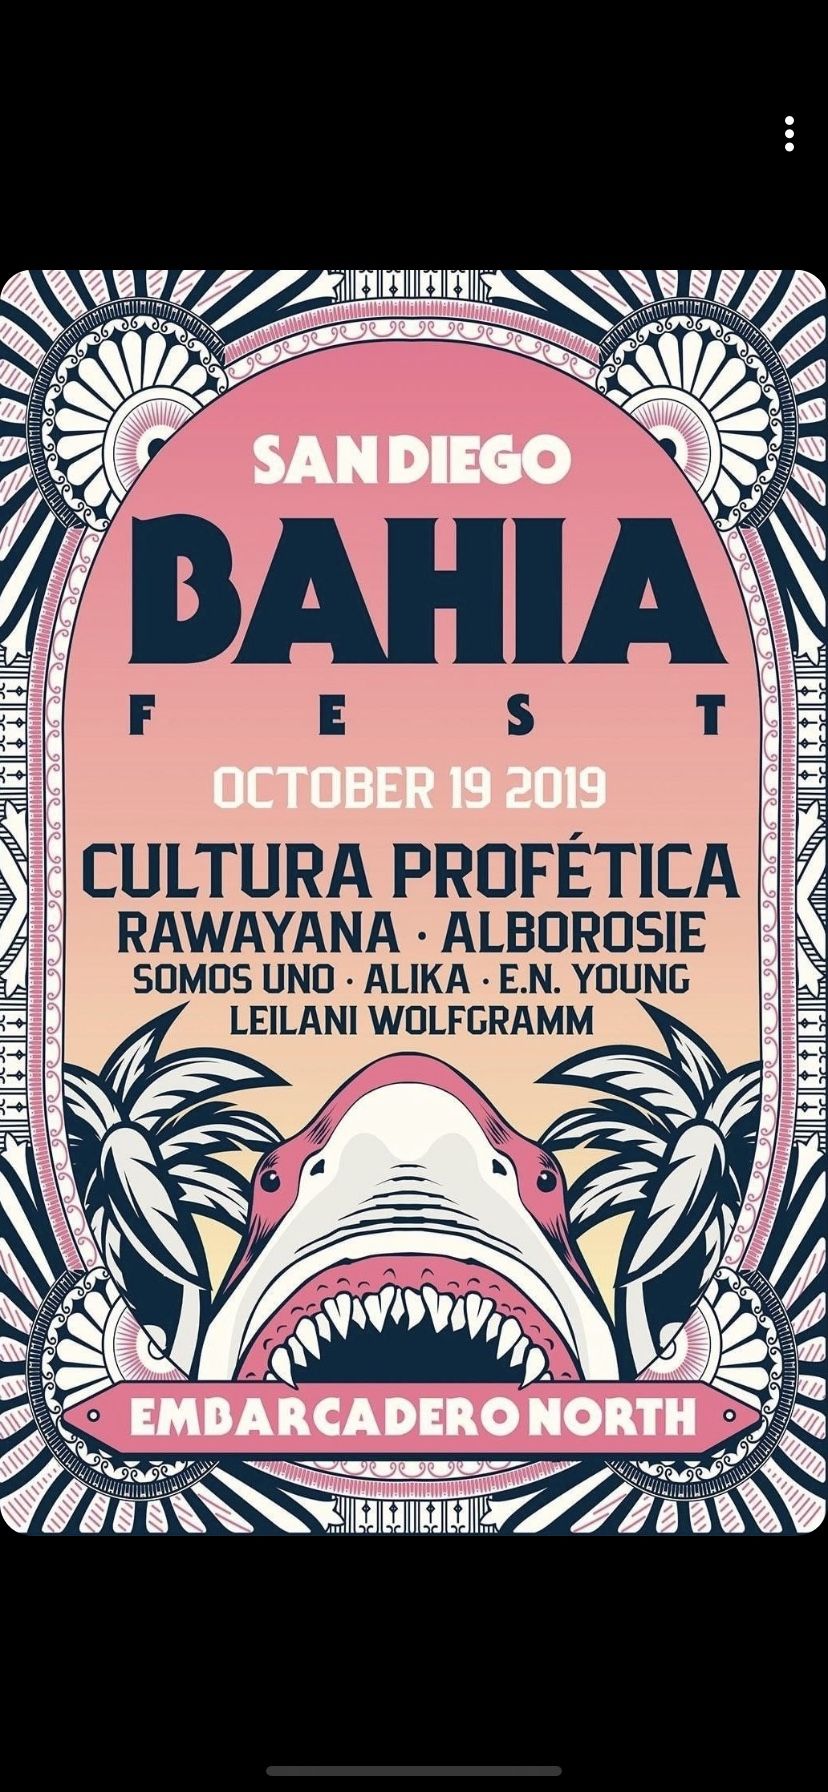 Bahia fest ticket